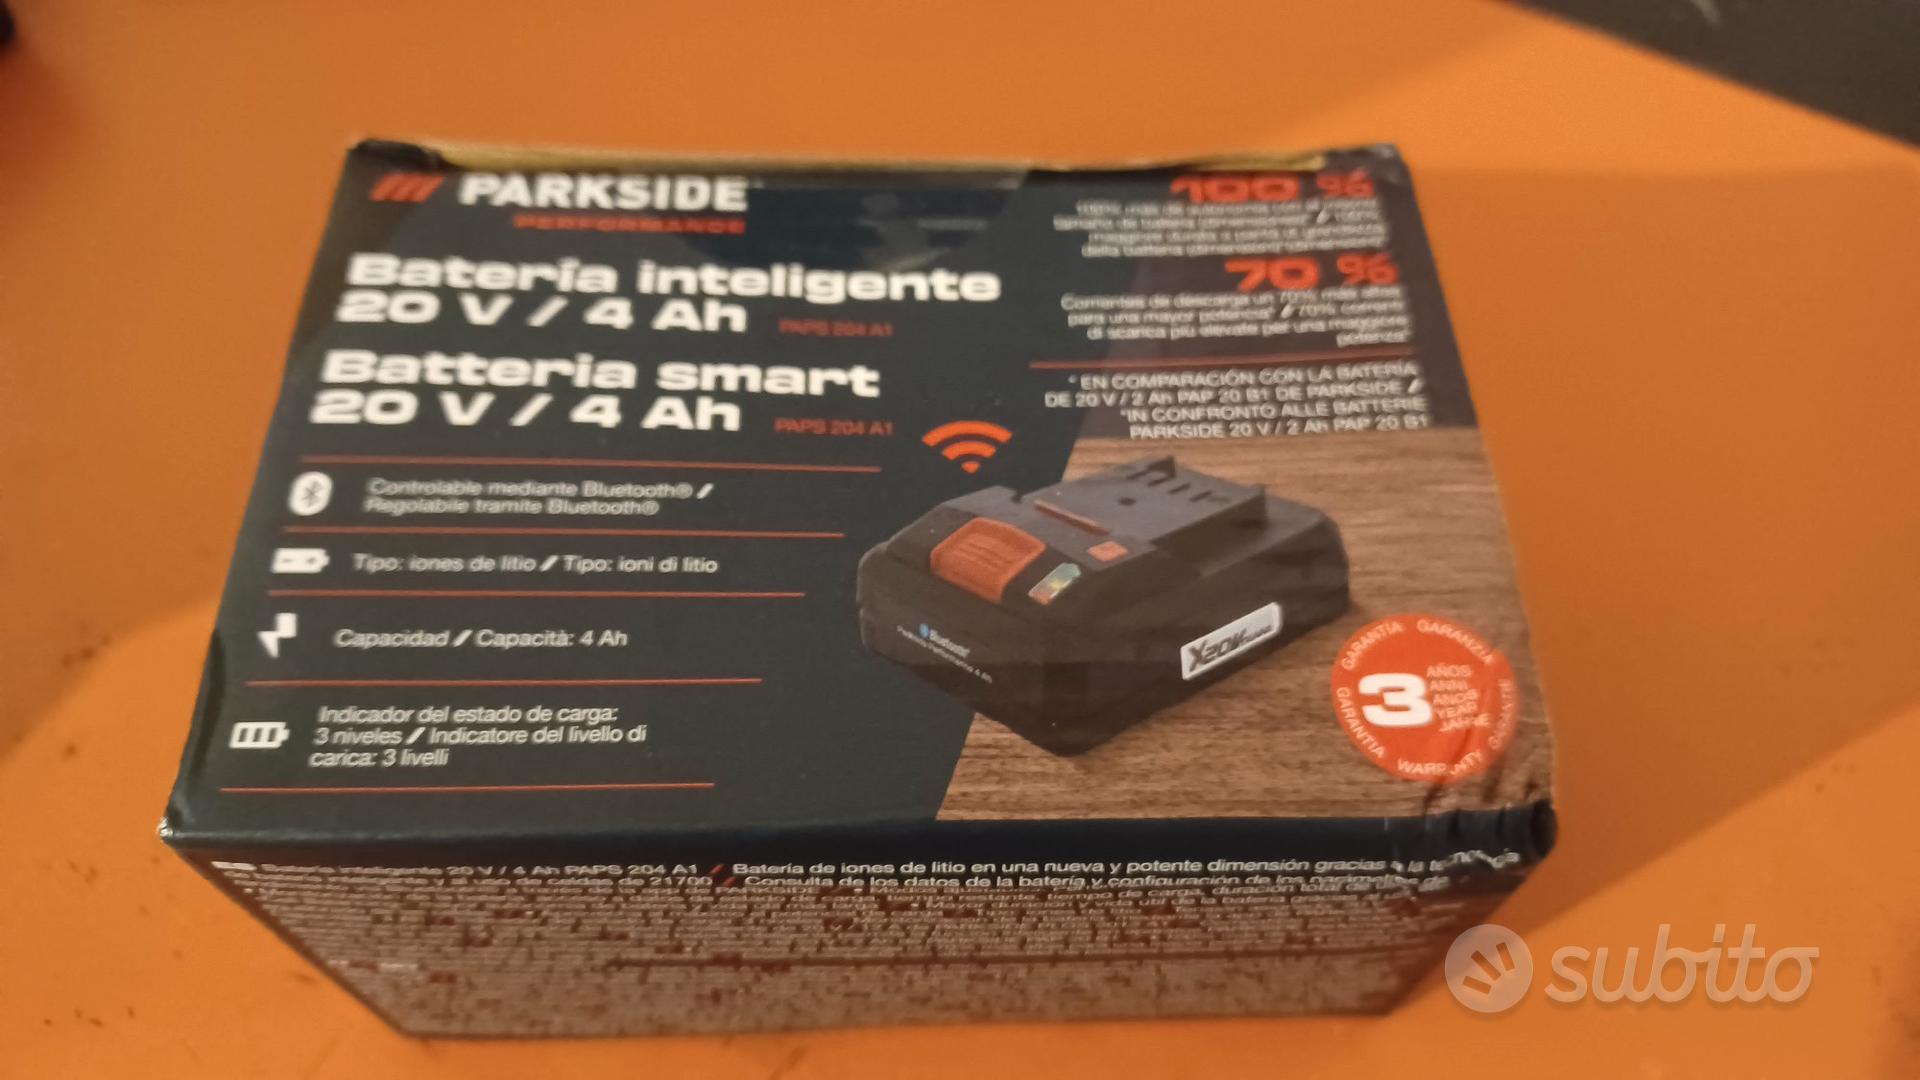 PARKSIDE batteria smart 20v. 4ah - Giardino e Fai da te In vendita a Bari